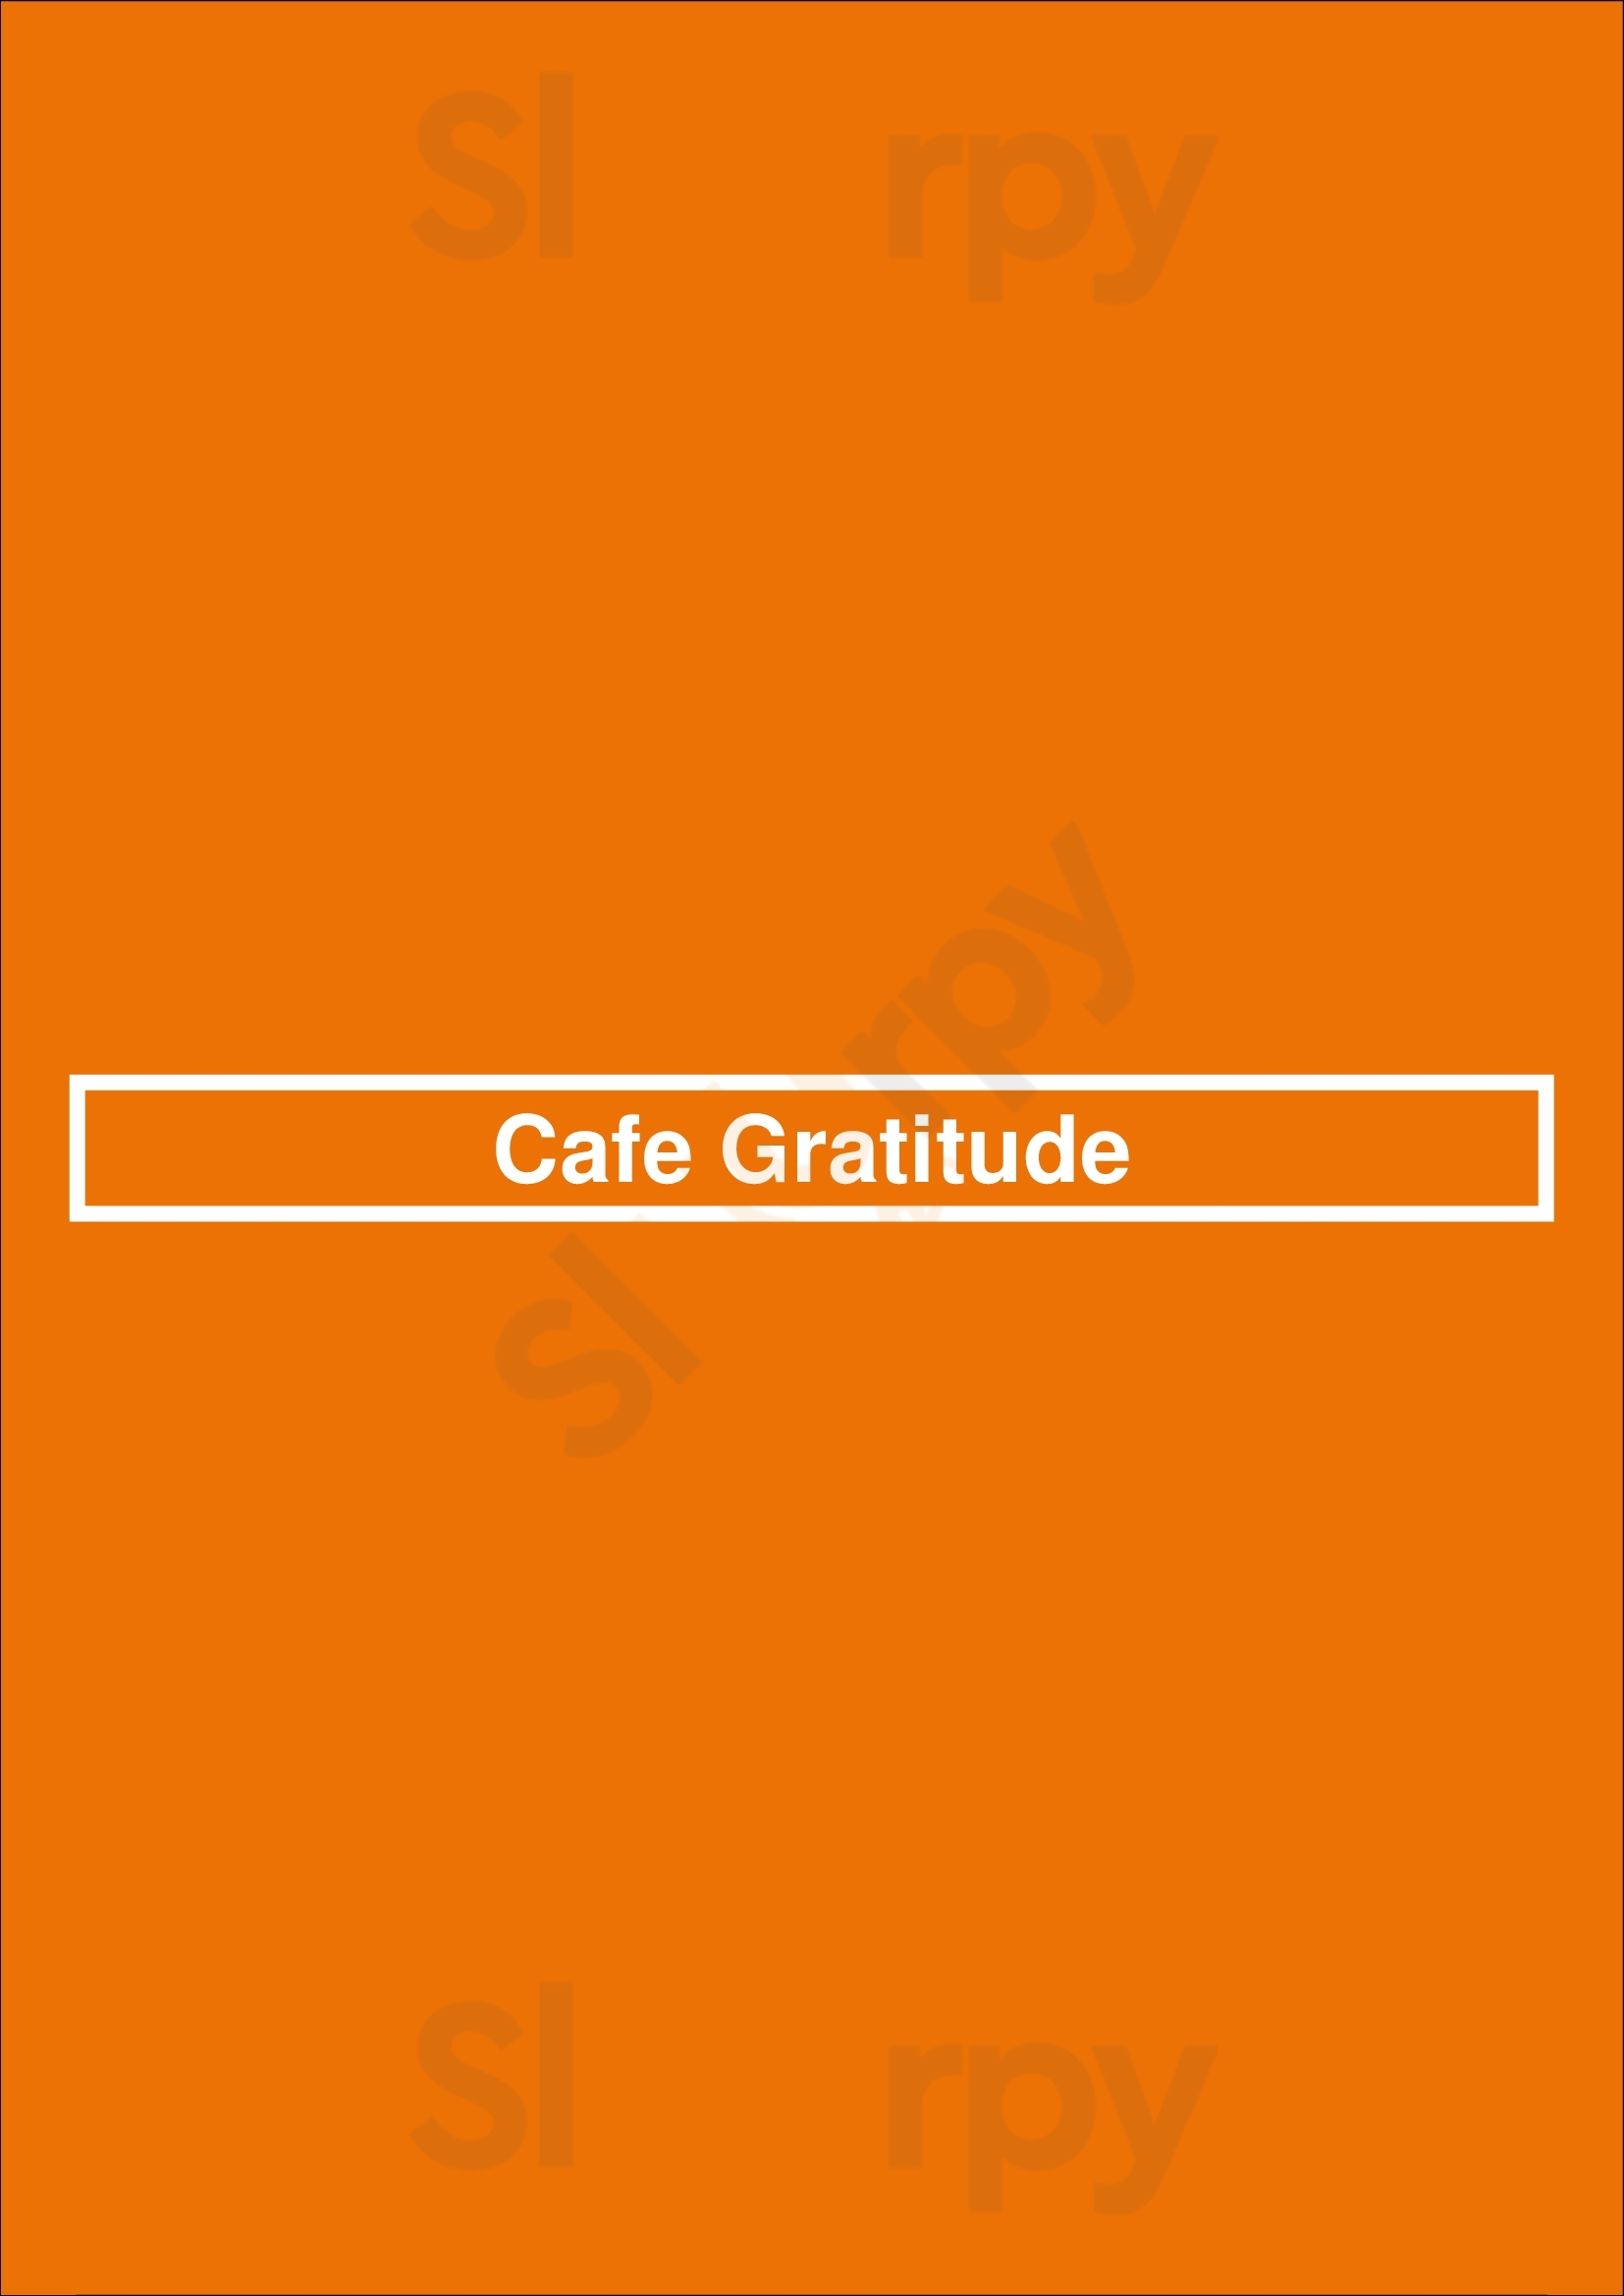 Cafe Gratitude Newport Newport Beach Menu - 1